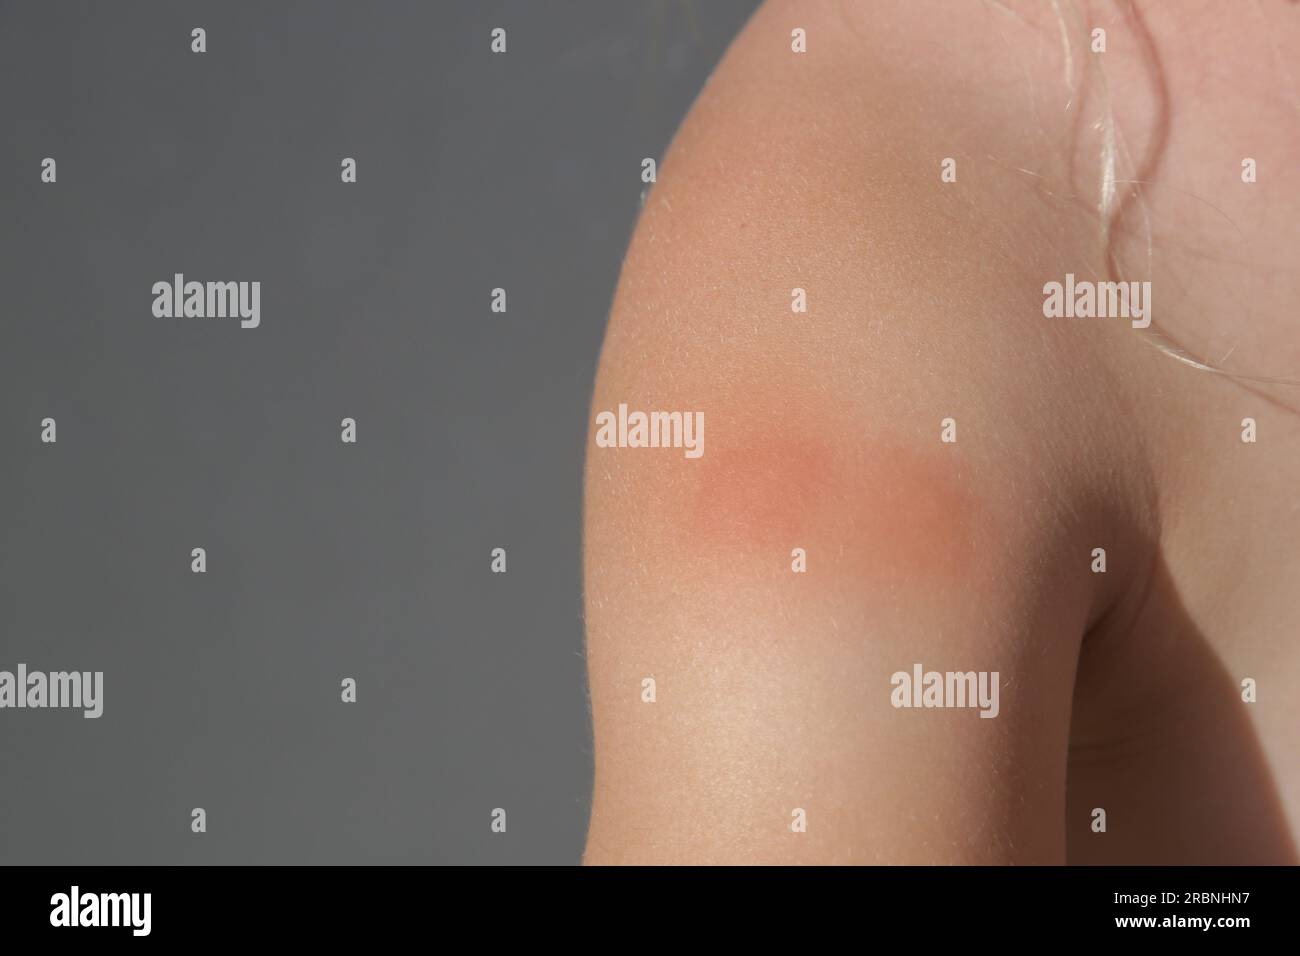 Little girl has skin rash from allergy or mosquito bites Stock Photo